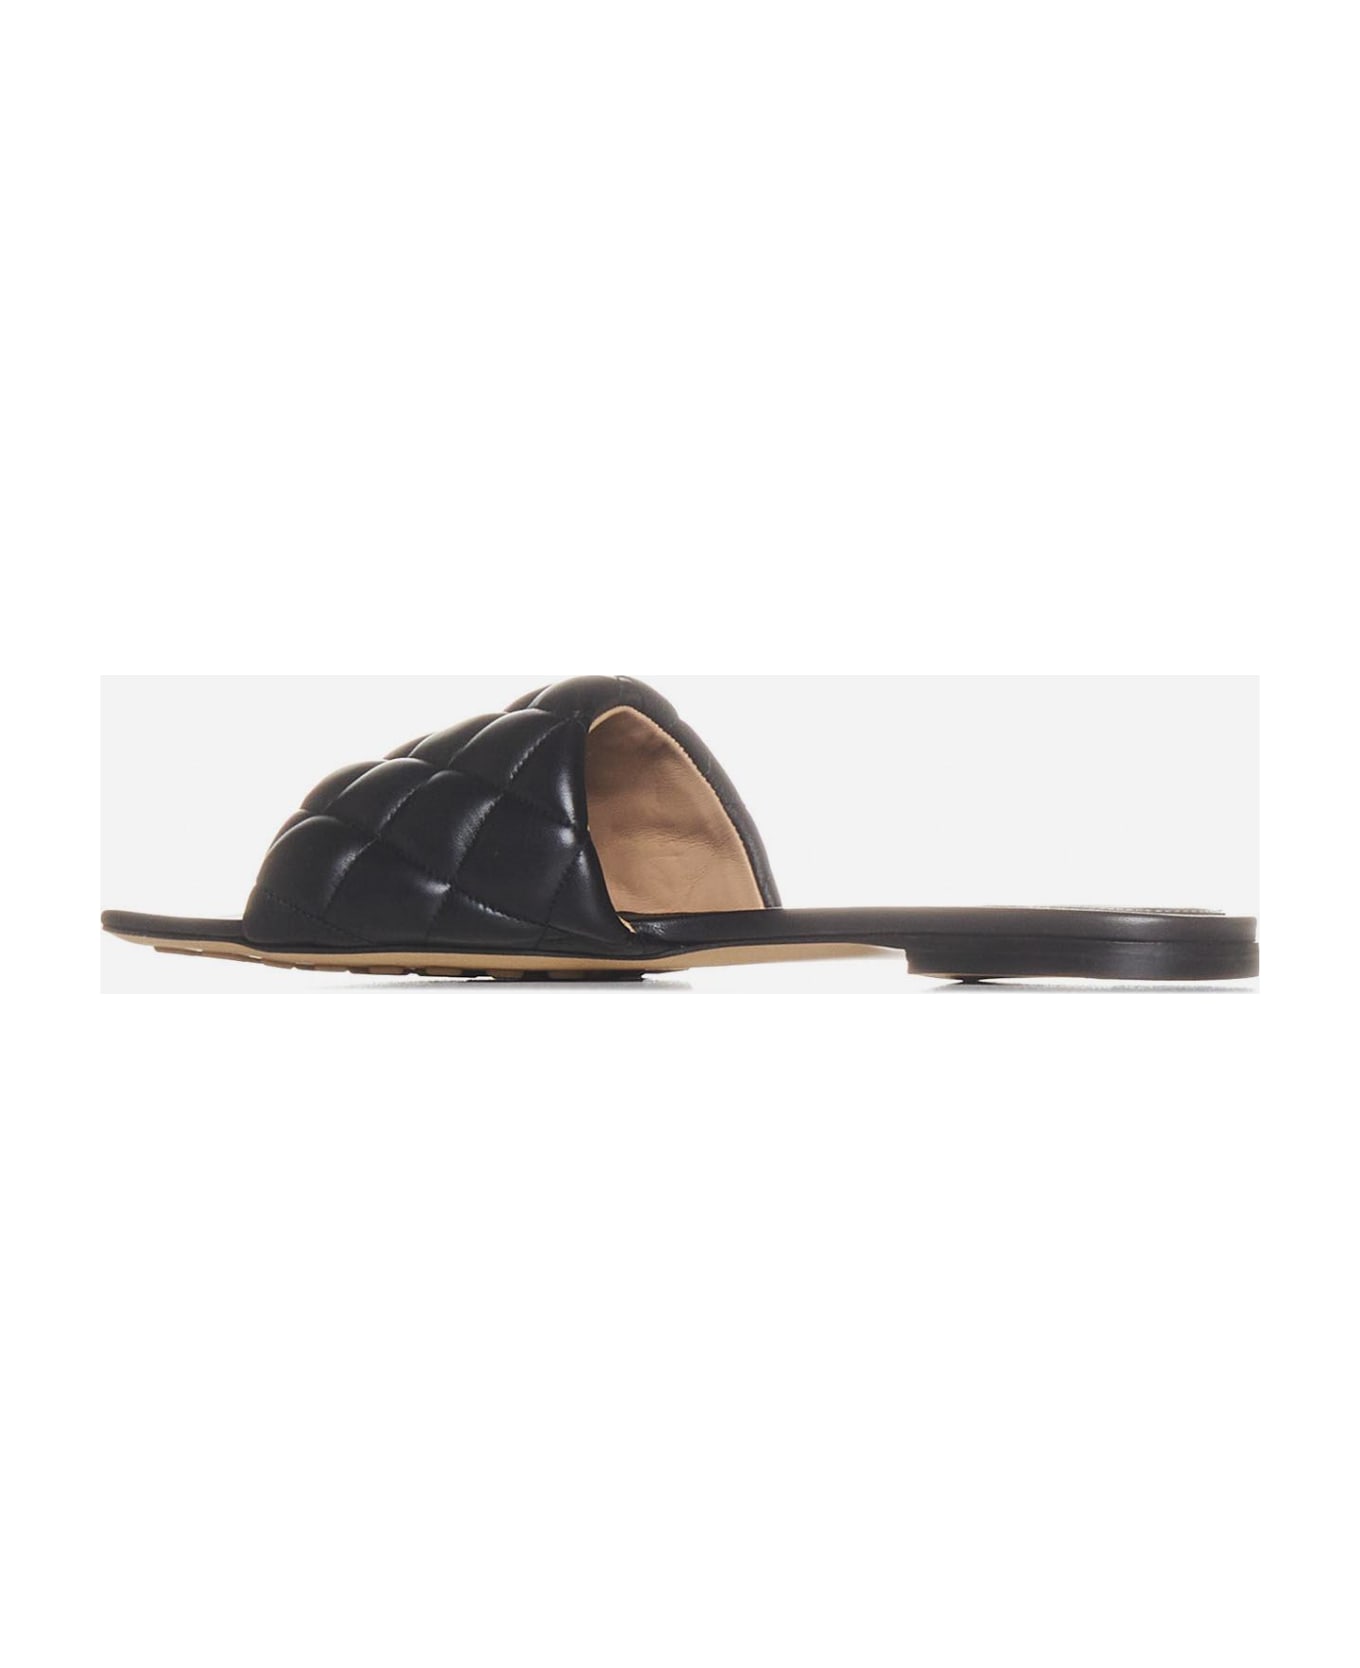 Bottega Veneta Padded Intrecciato Leather Flat Sandals - Black